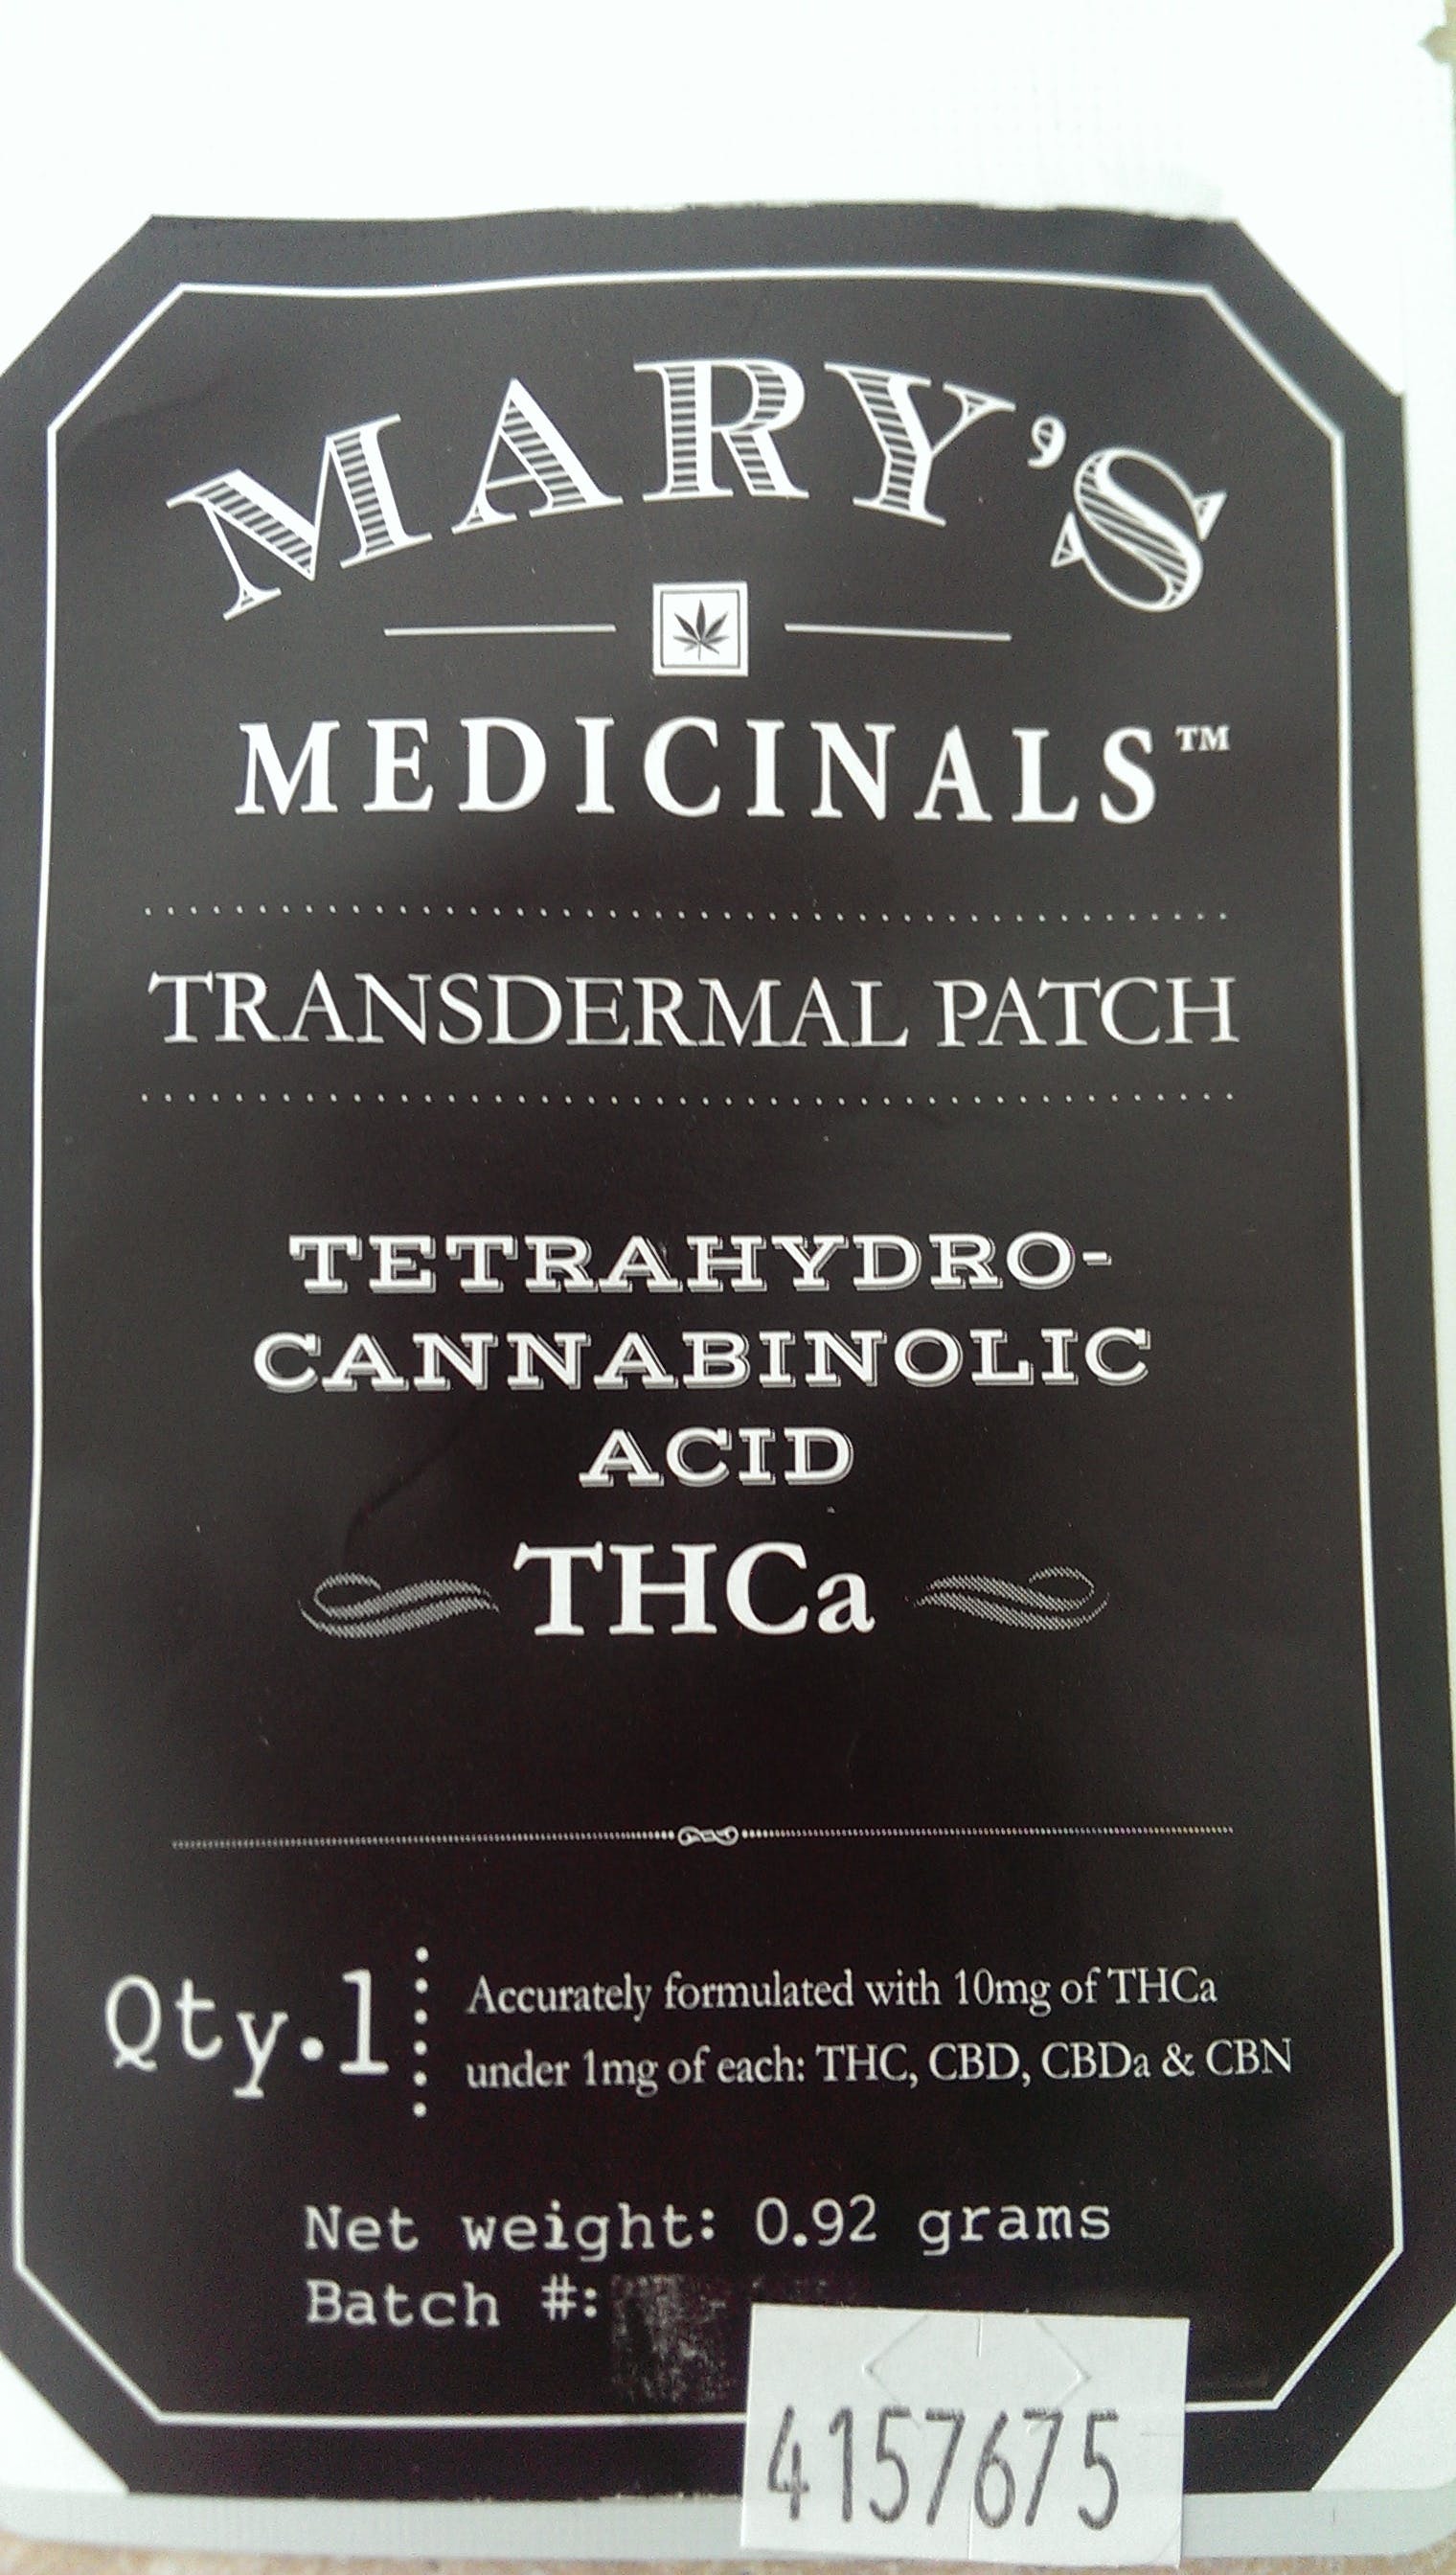 Mary's Medicinal Transdermal Patch - THCA